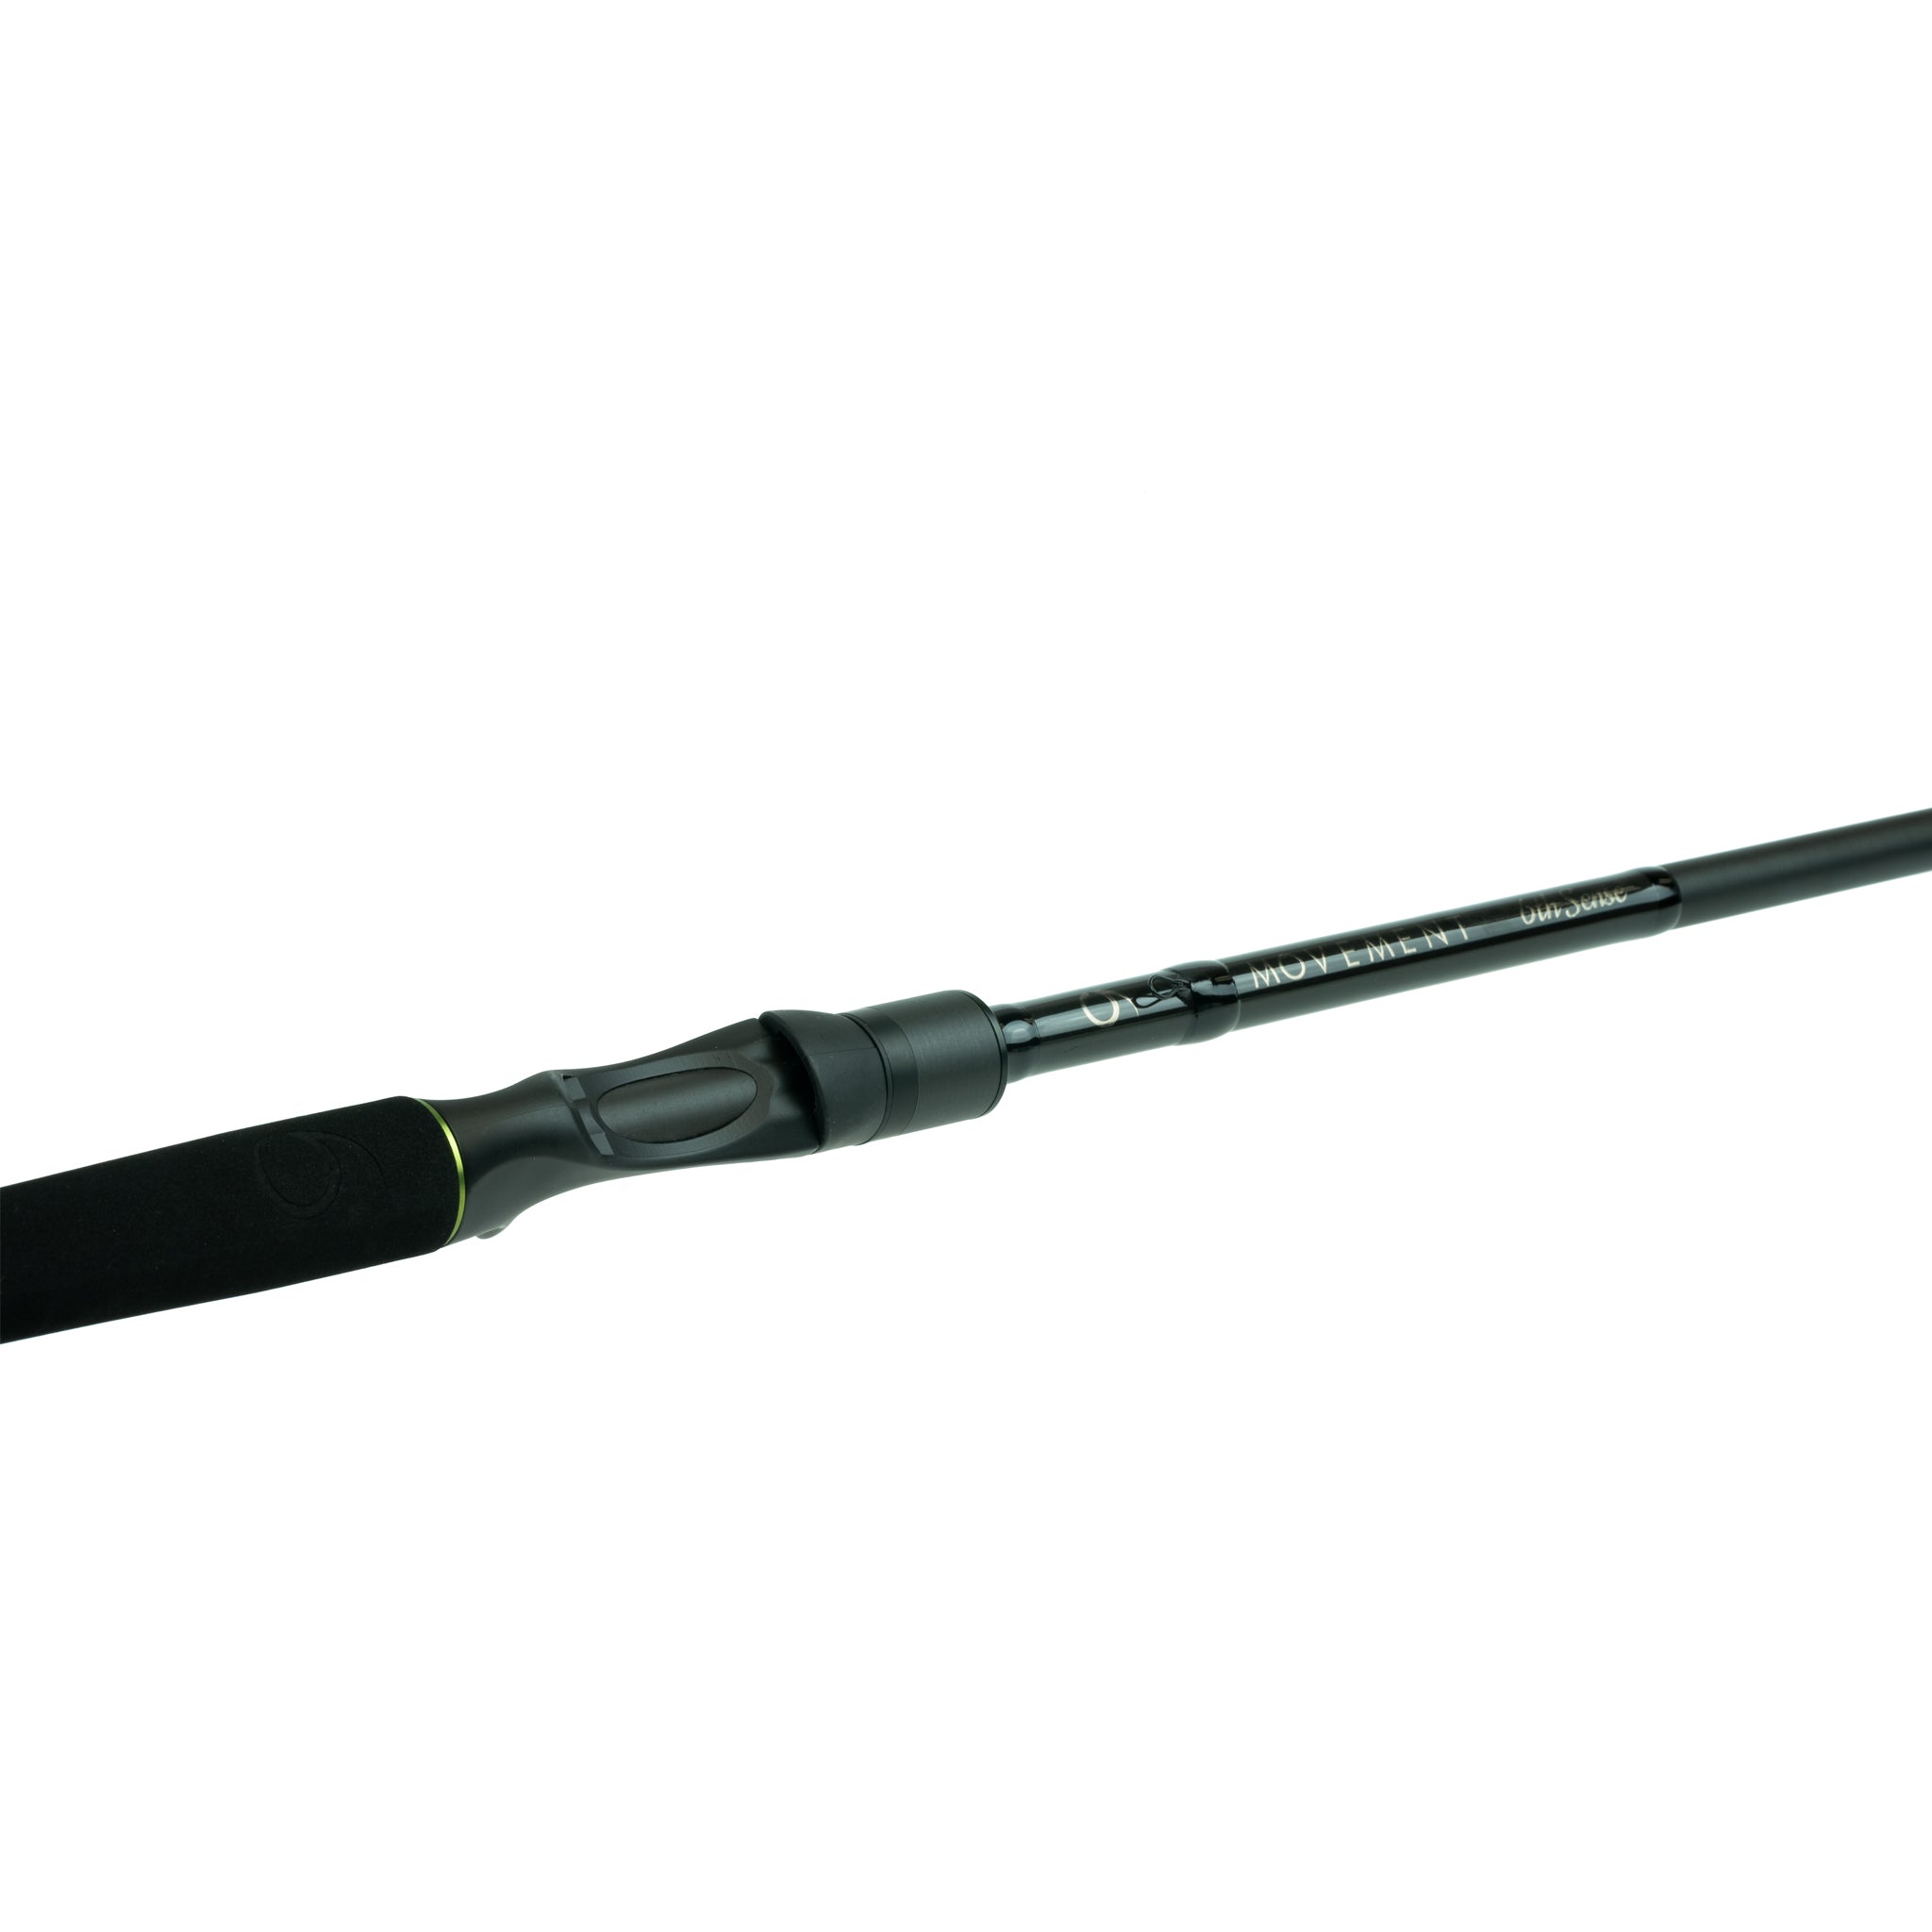 6th Sense Fishing - Stache Stick Rod Series - 6'11 Med-Hvy, Fast